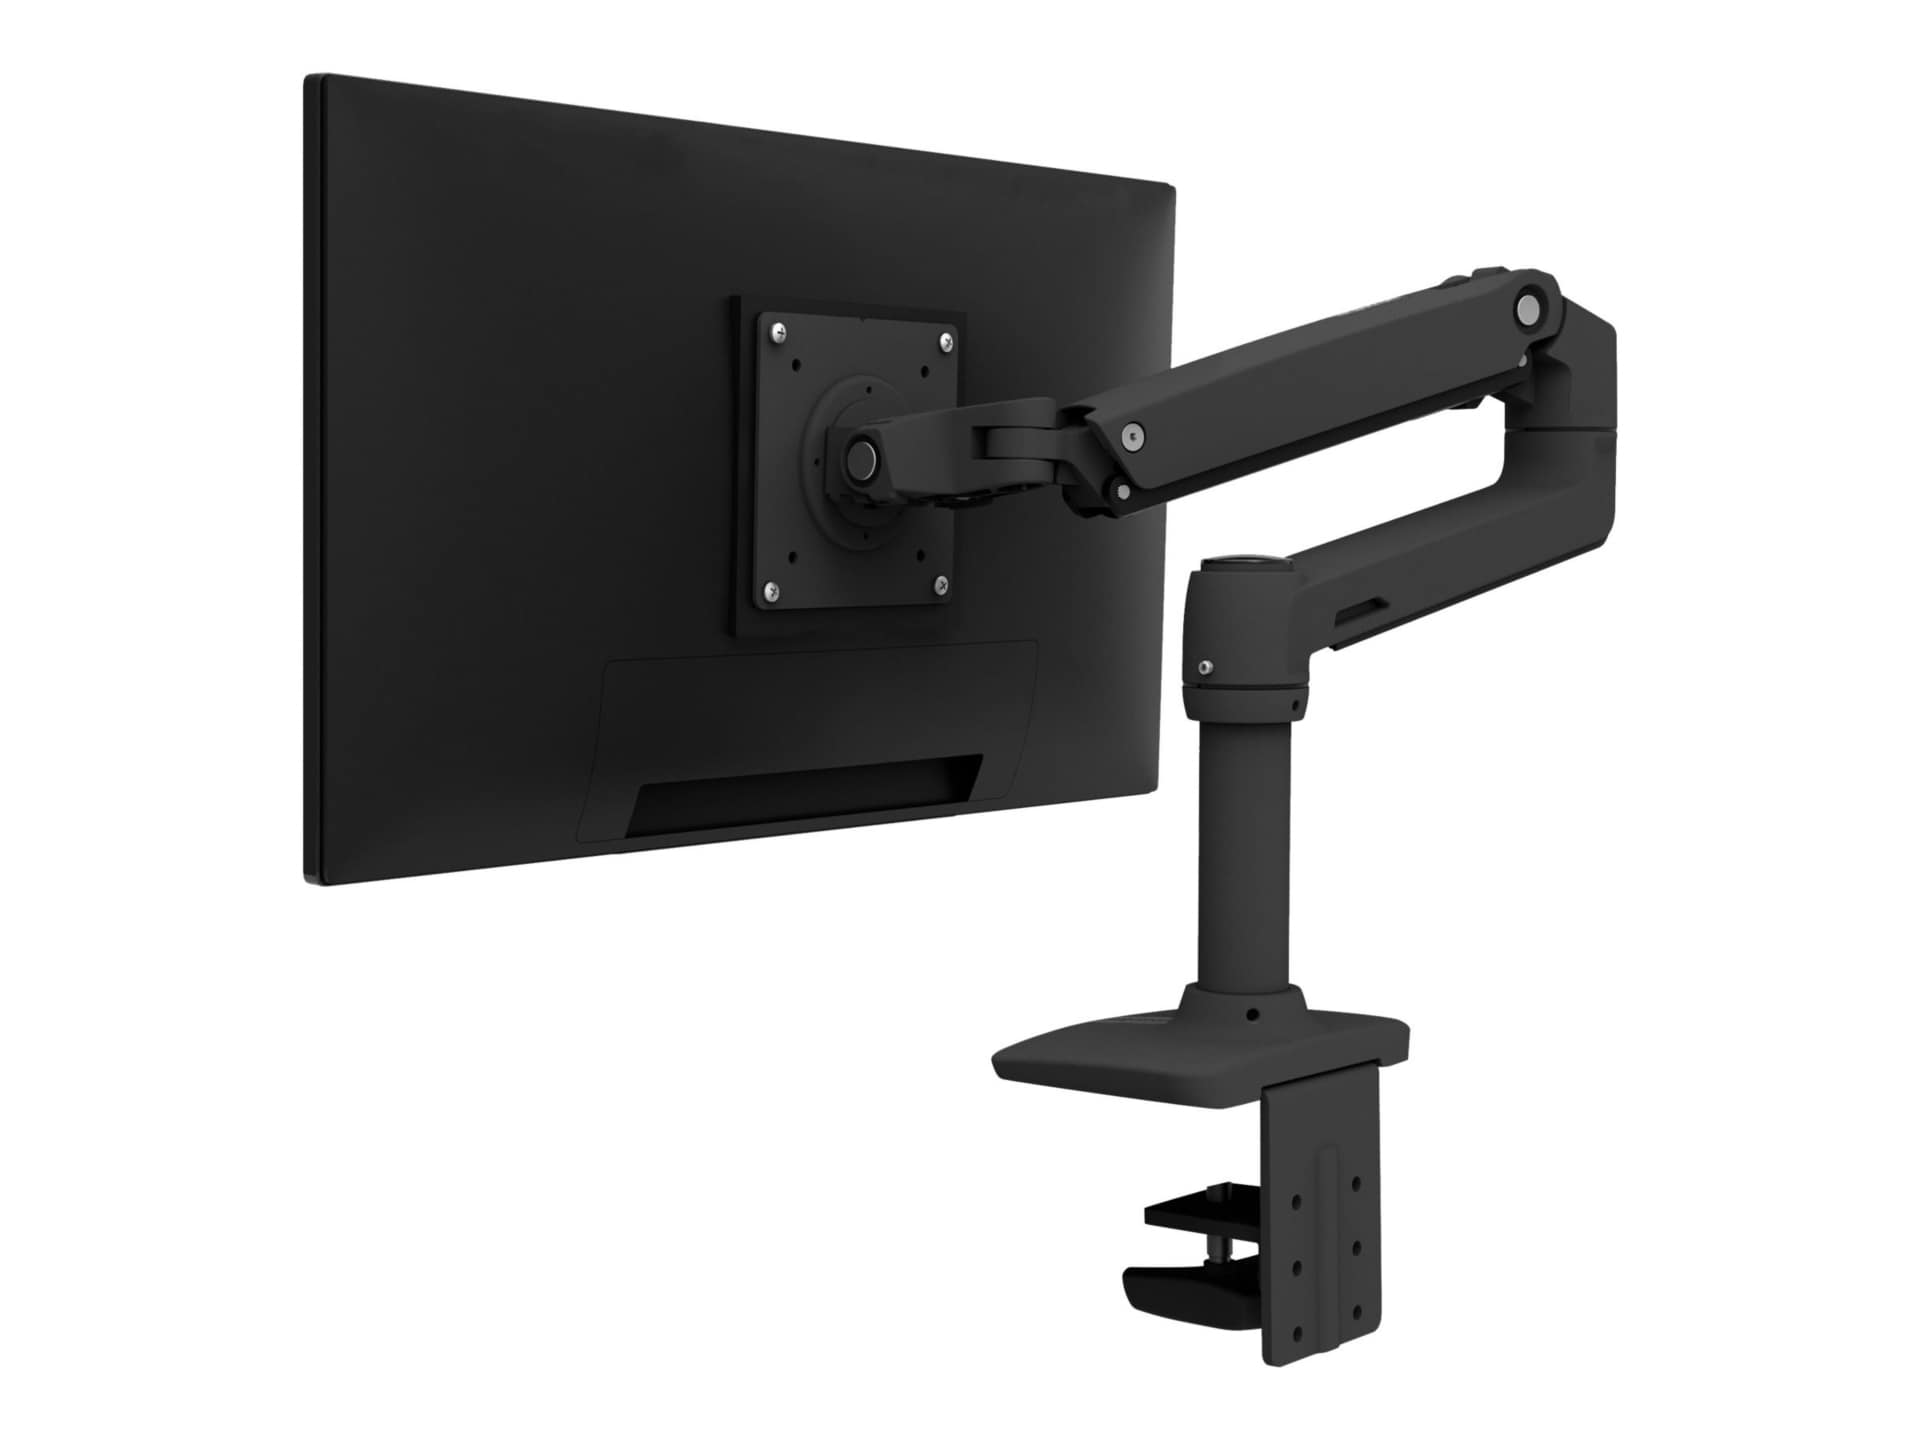 Ergotron Lx Desk Monitor Arm Mounting Kit 45 241 224 Mounts